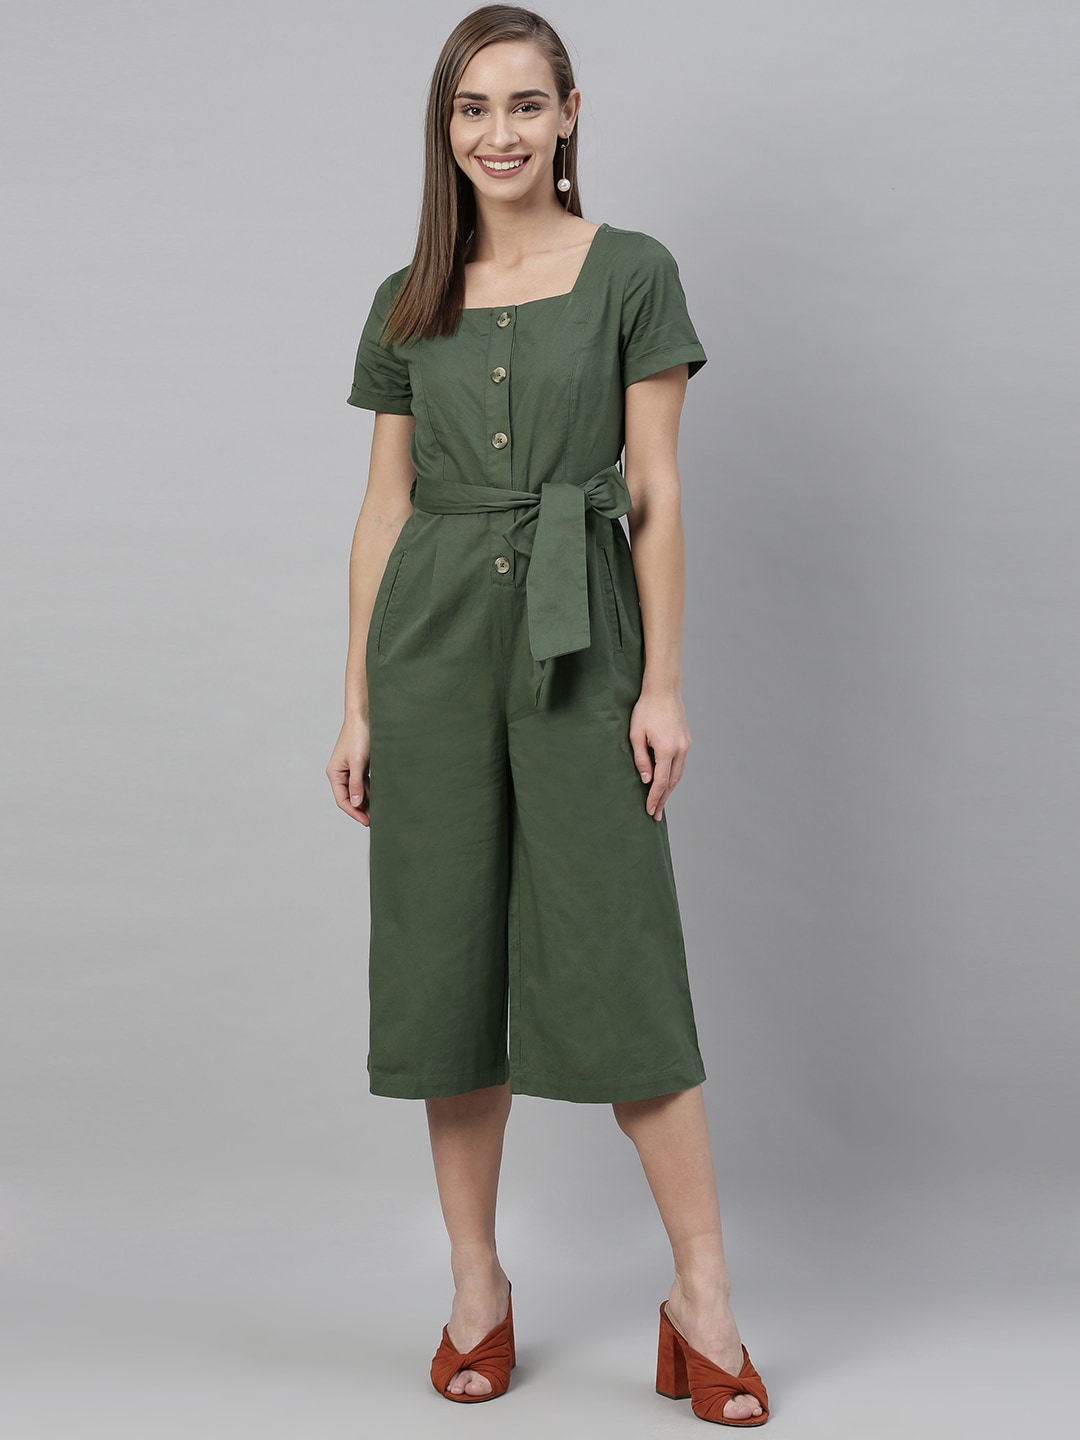 Vero Moda Women Olive Green Solid Capri Jumpsuit Price in India